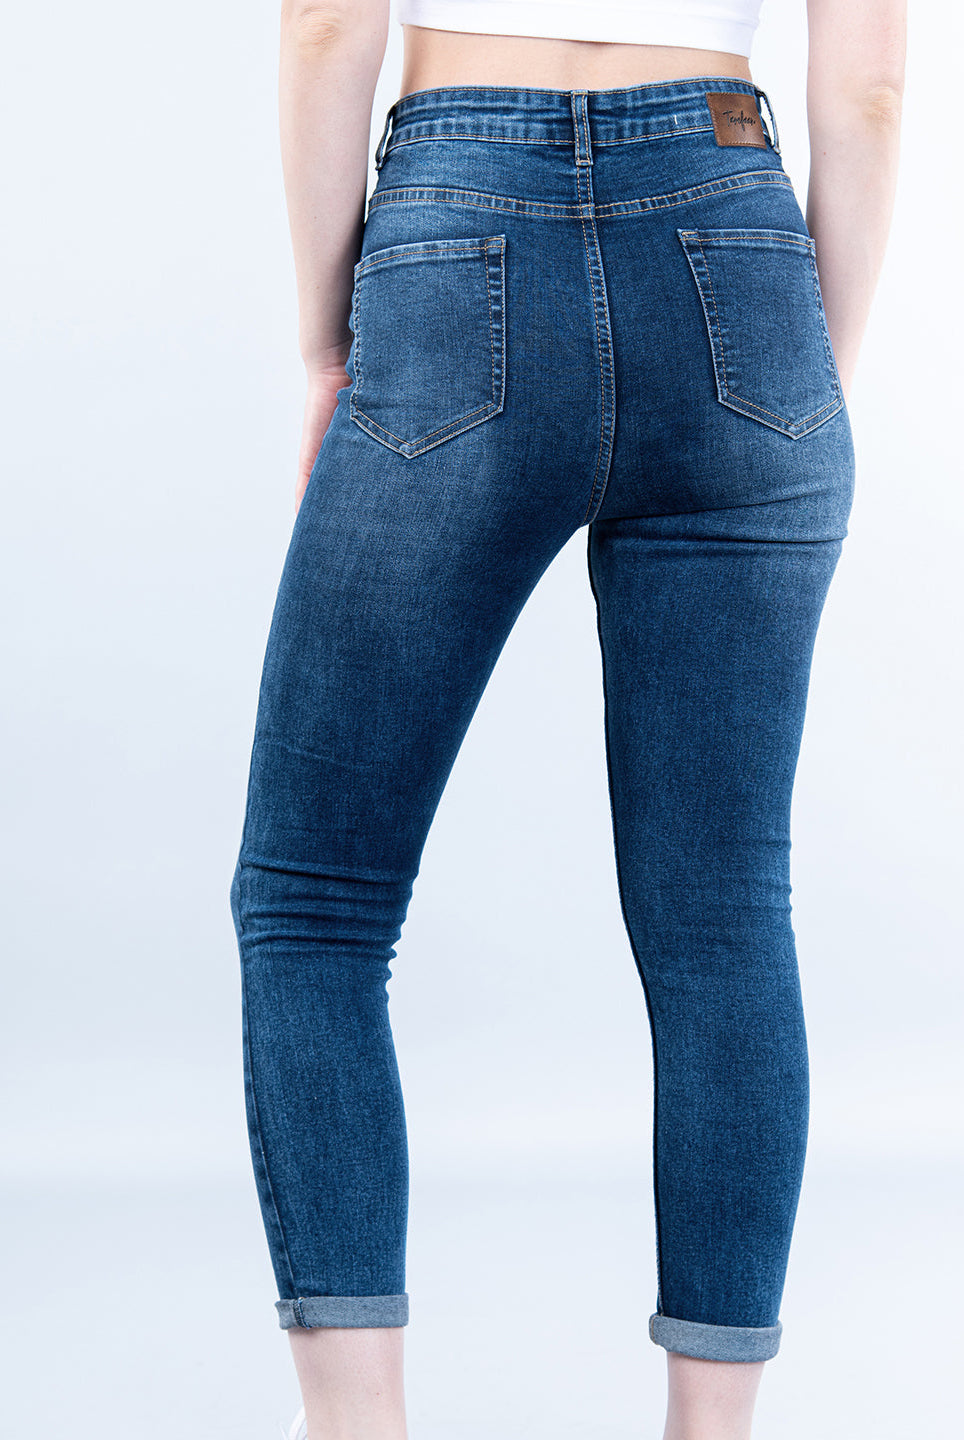 blue jeans for women skinny